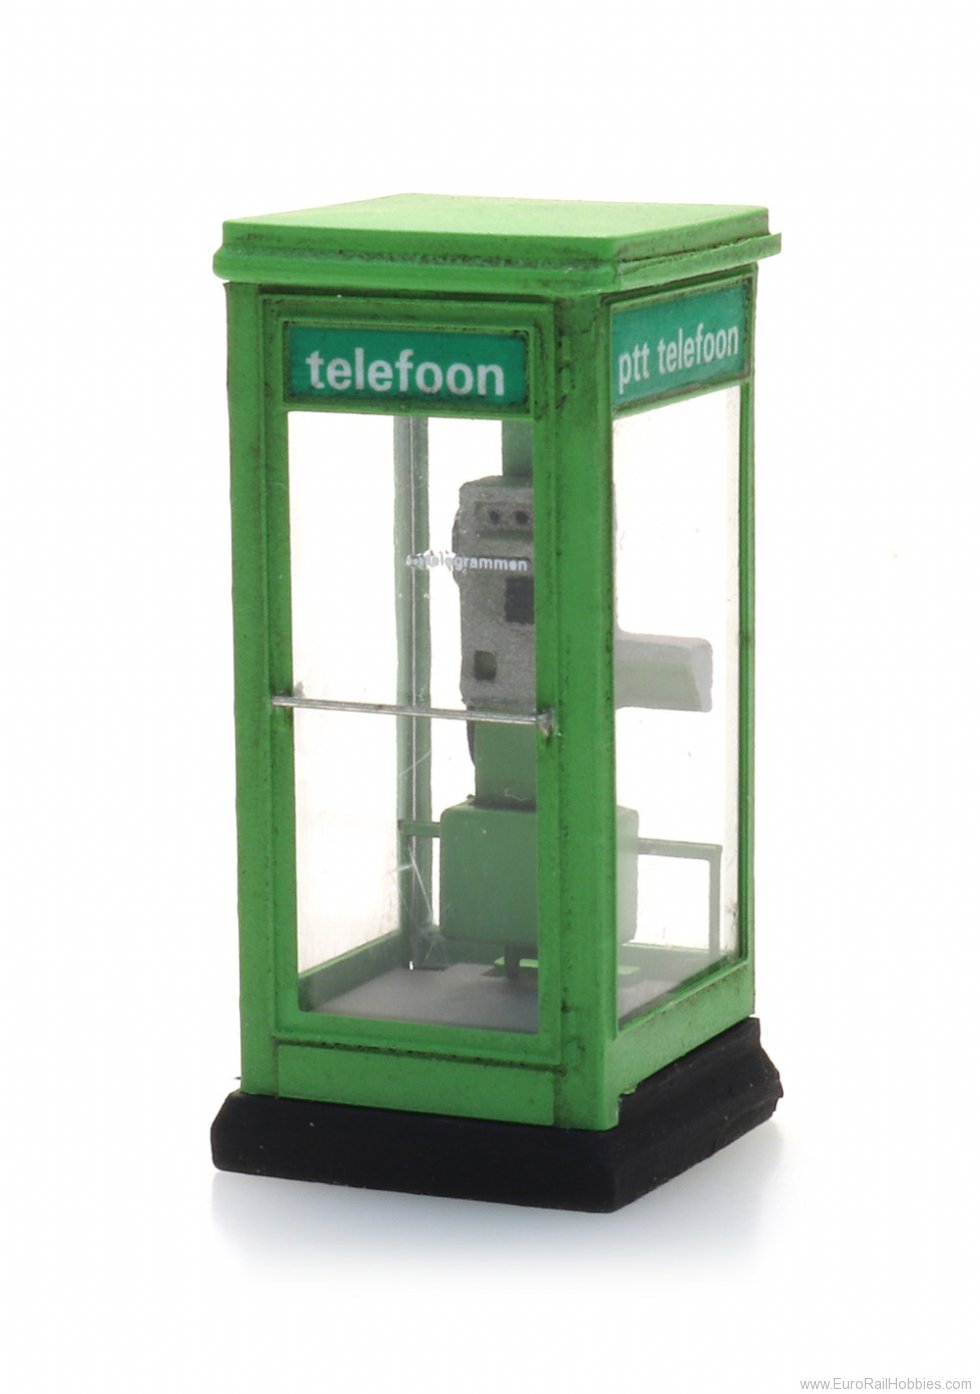 Artitec 387.484 PTT green phone booth